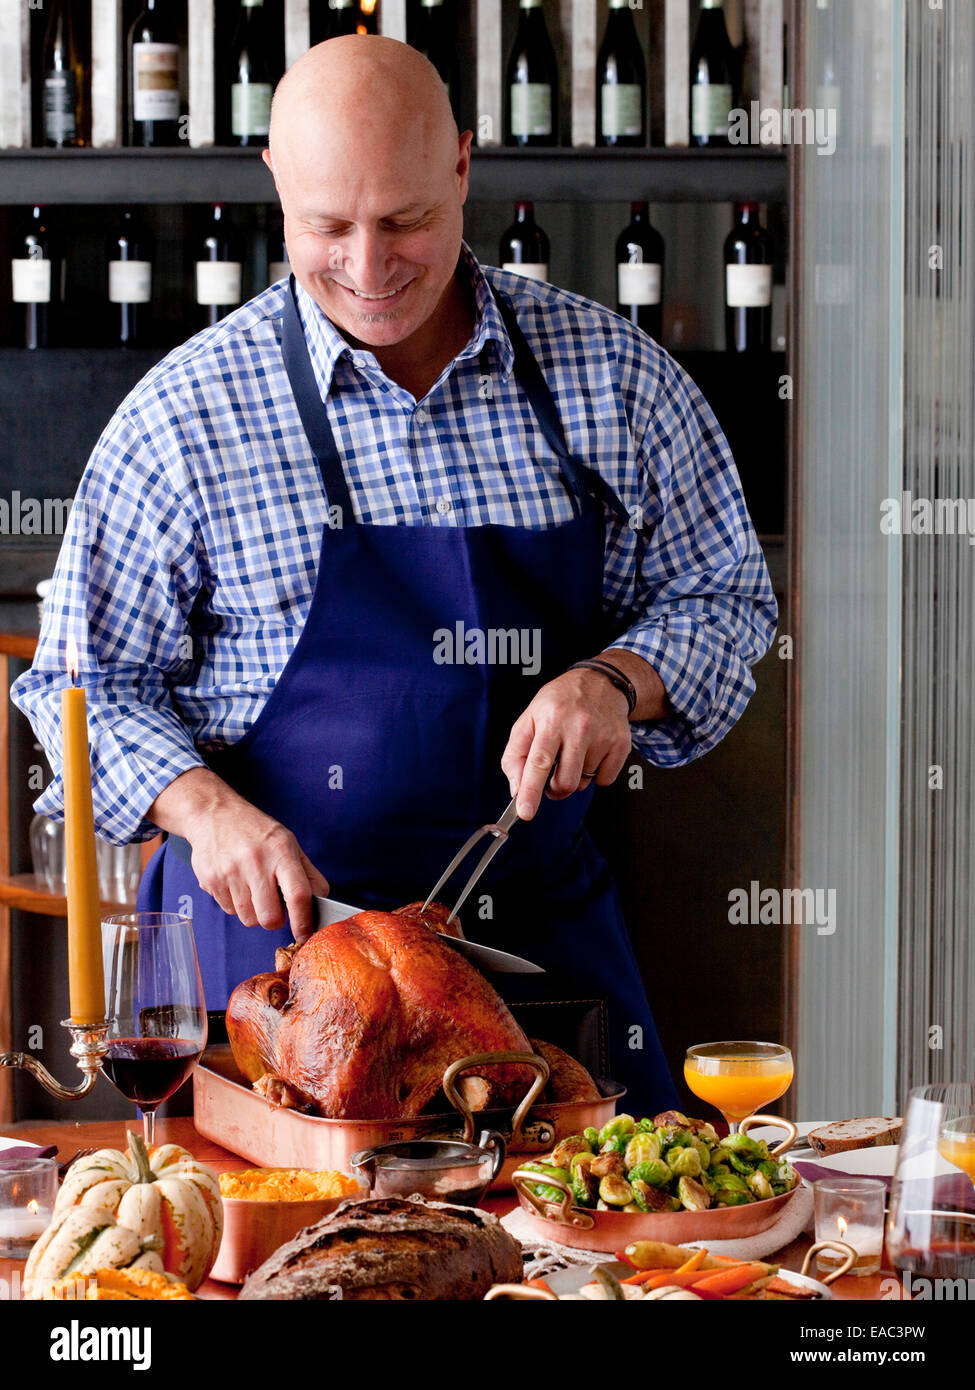 07.11.2013, bereitet New York, NY-Chef Tom Colicchio ein Thanksgiving-Essen in seinem Restaurant Kraft. Stockfoto